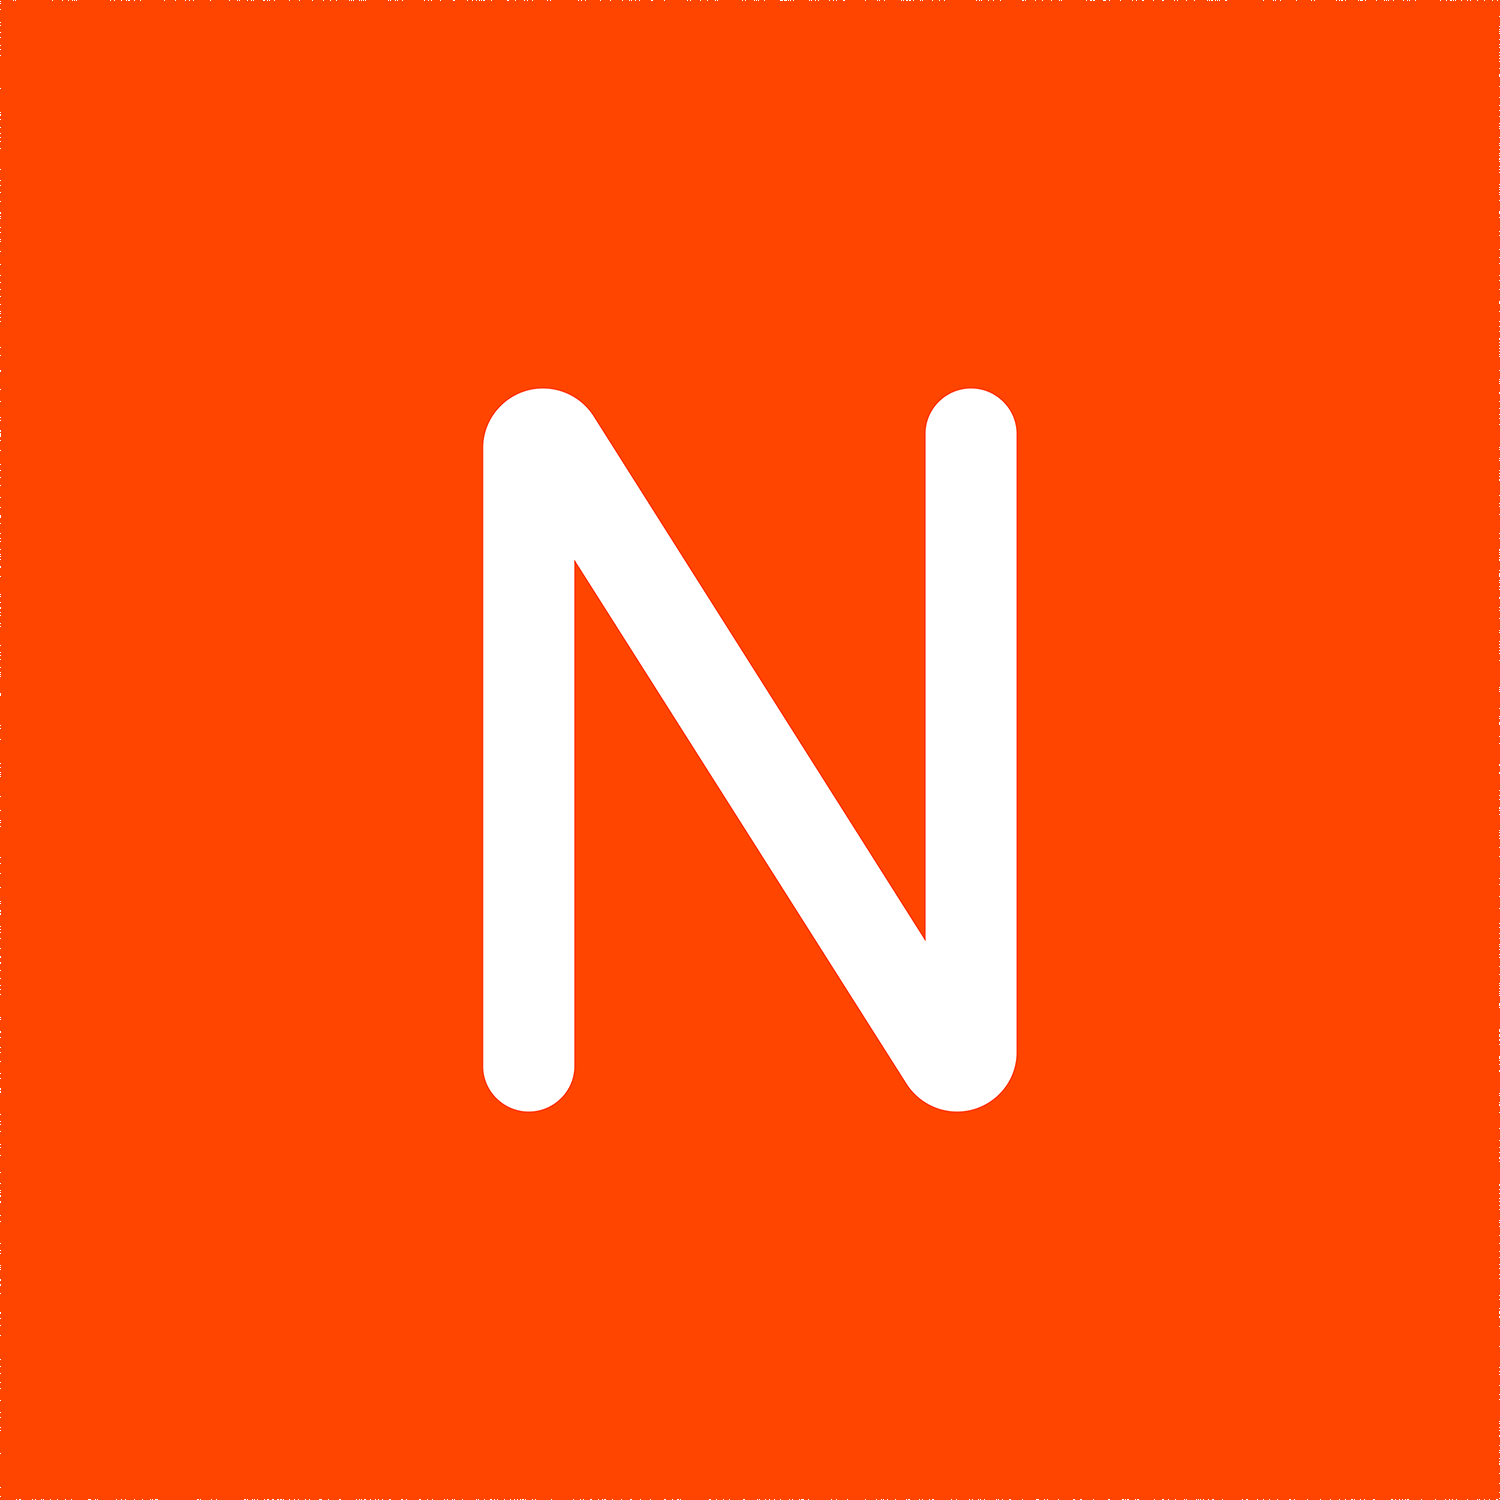 NAVEX logo orange icon